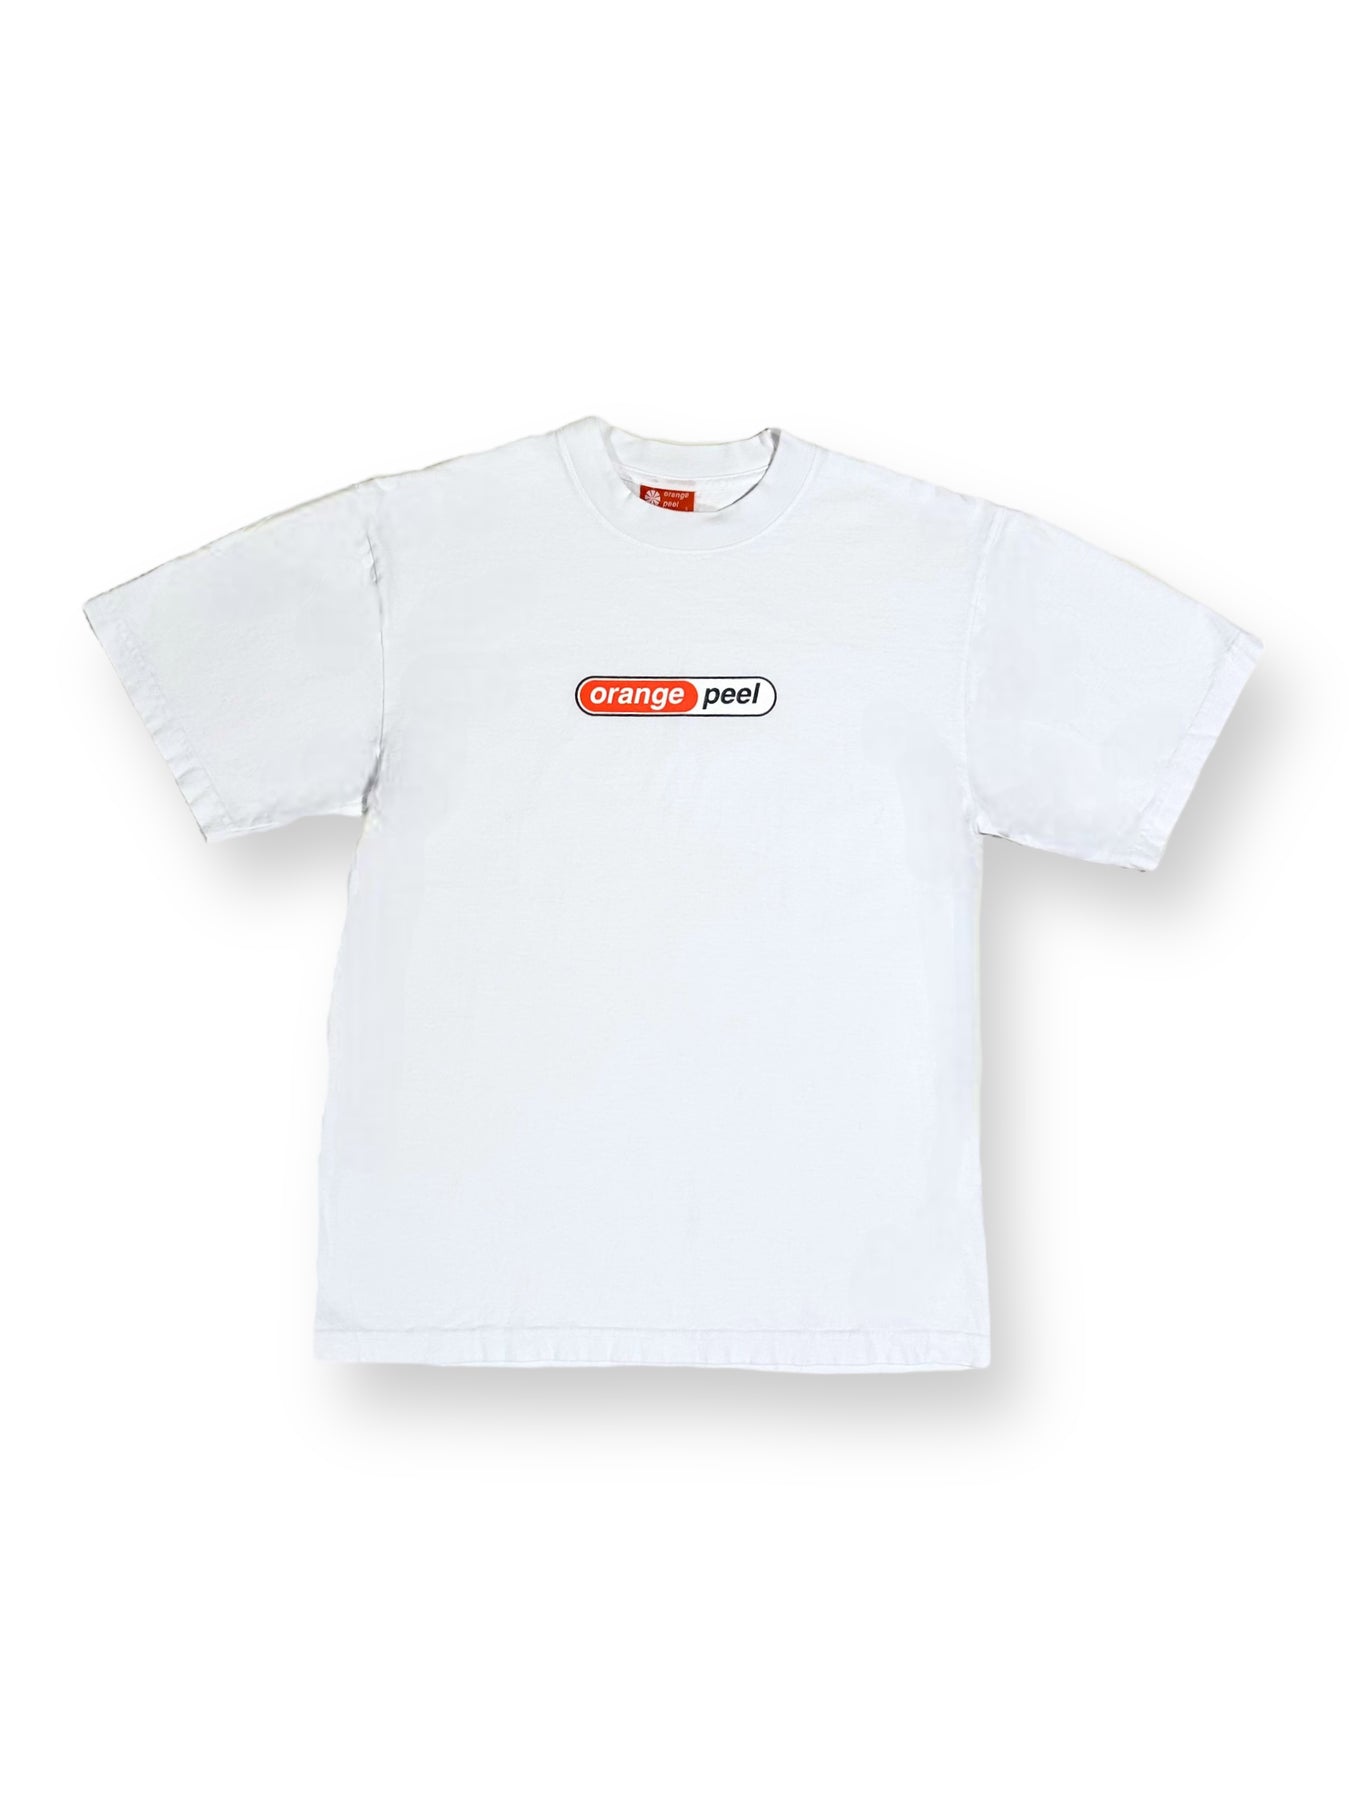 lv supreme white t shirt,Save up to 17%